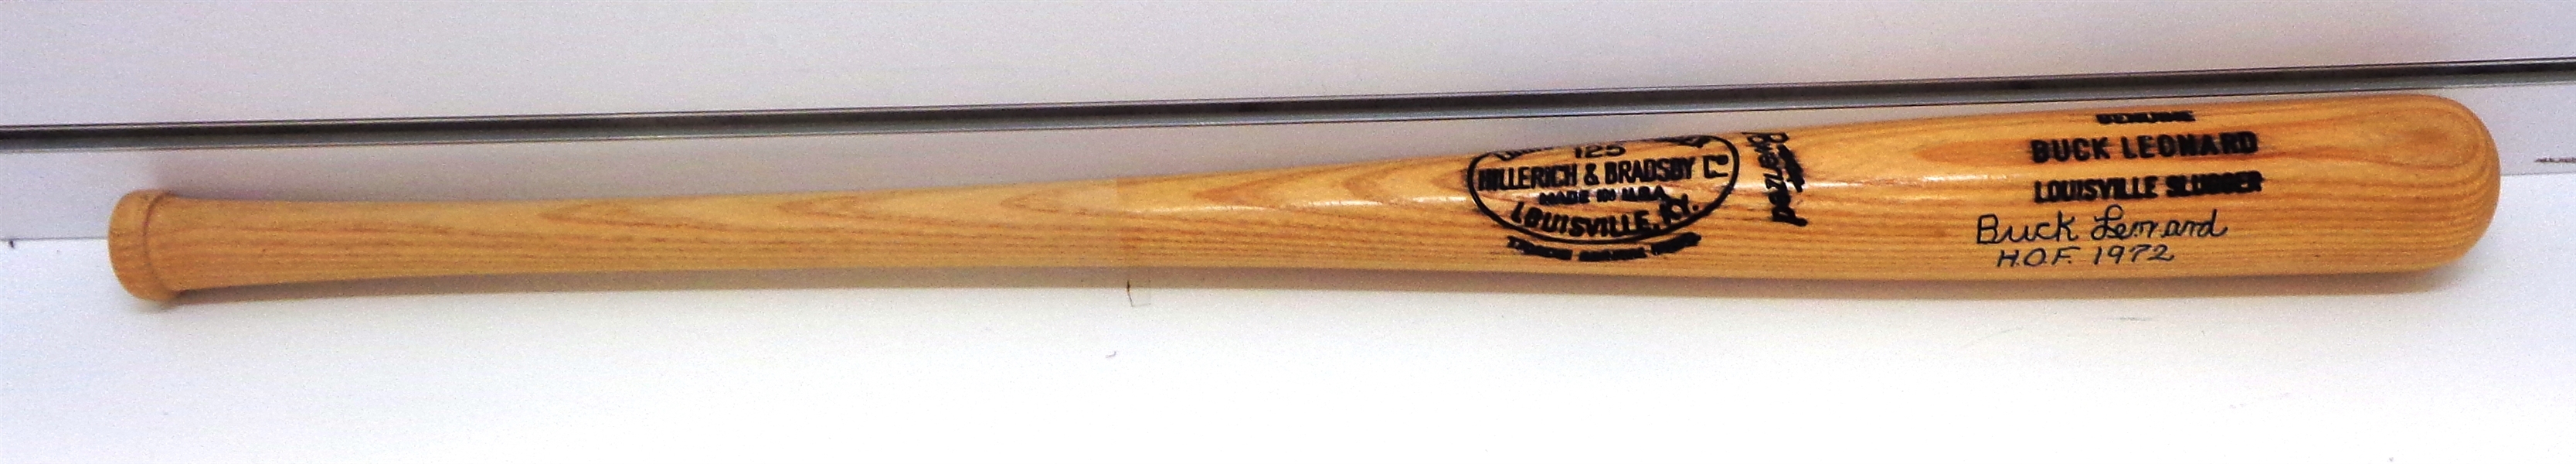 Buck Leonard Autographed Game Model Louisville Slugger Bat w HOF 1972